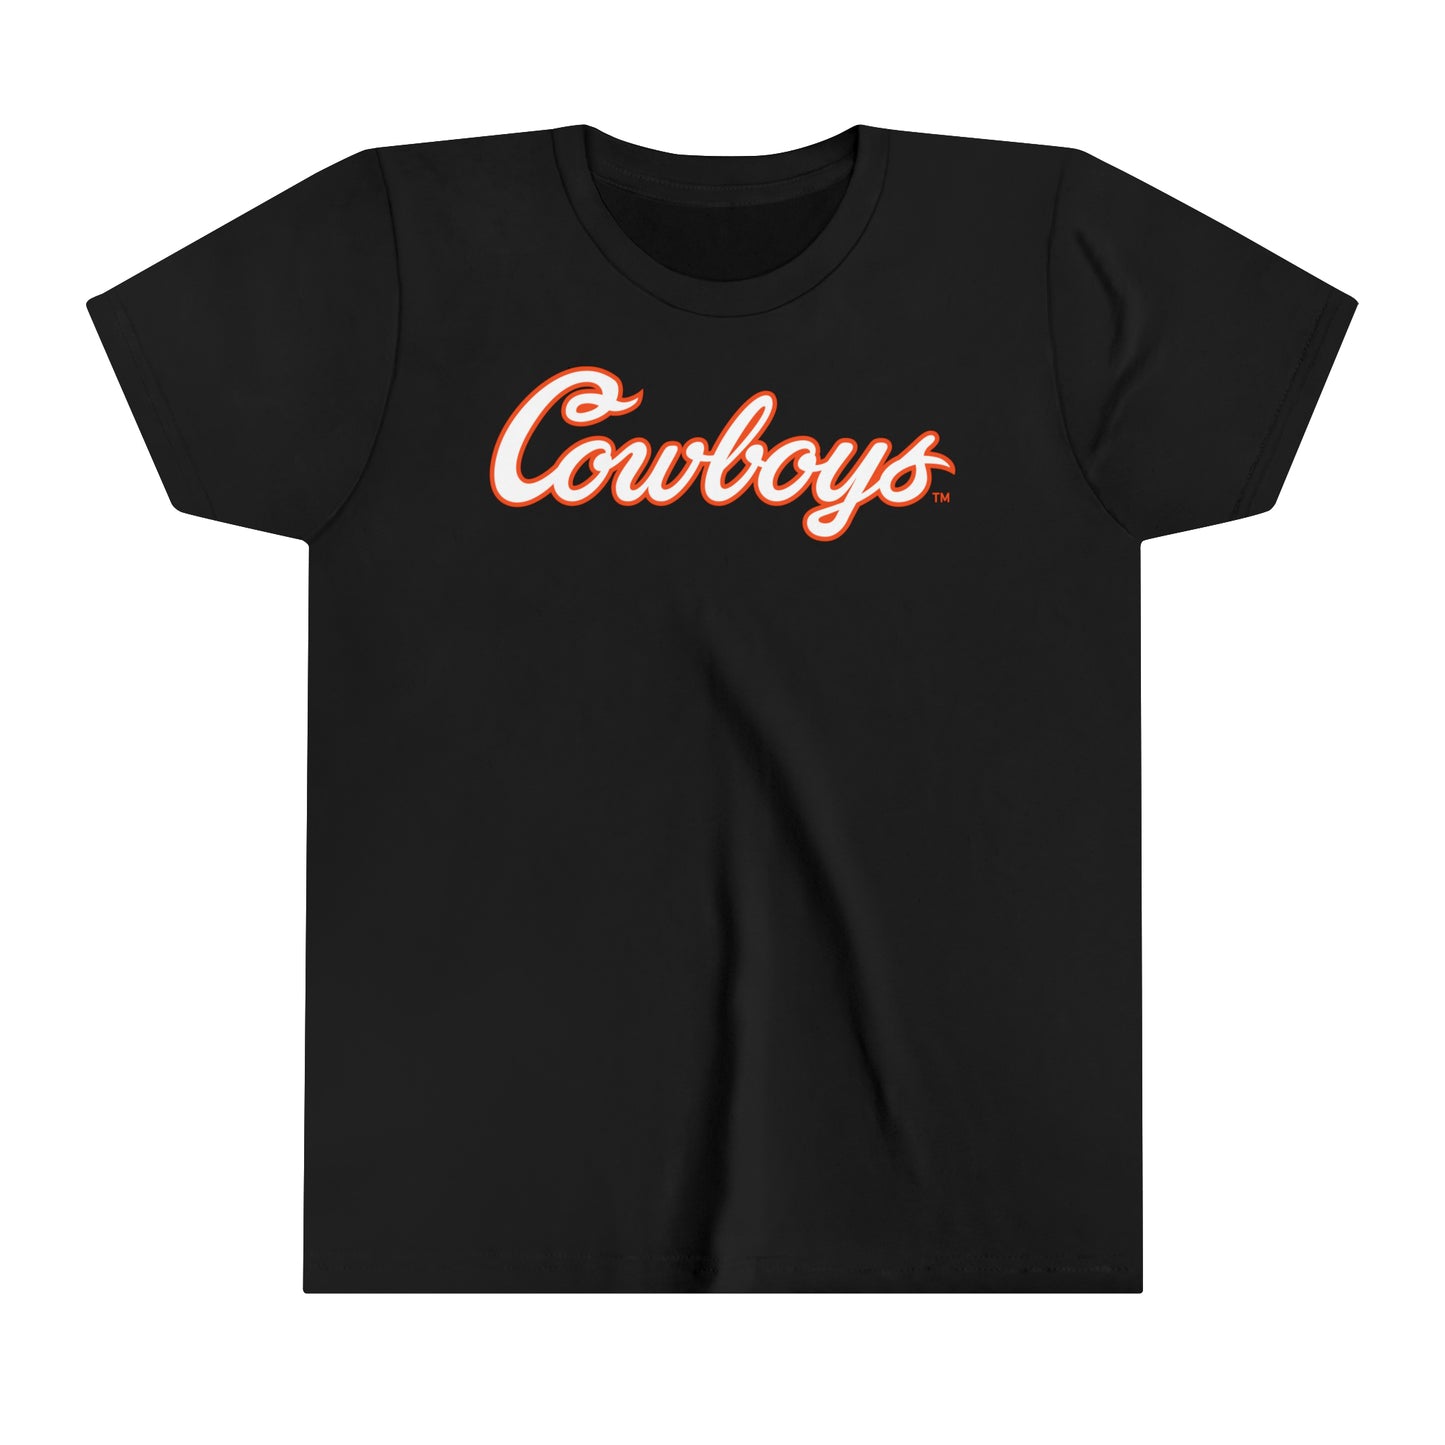 Brooks Manzer #22 Cursive Cowboys Youth T-Shirt